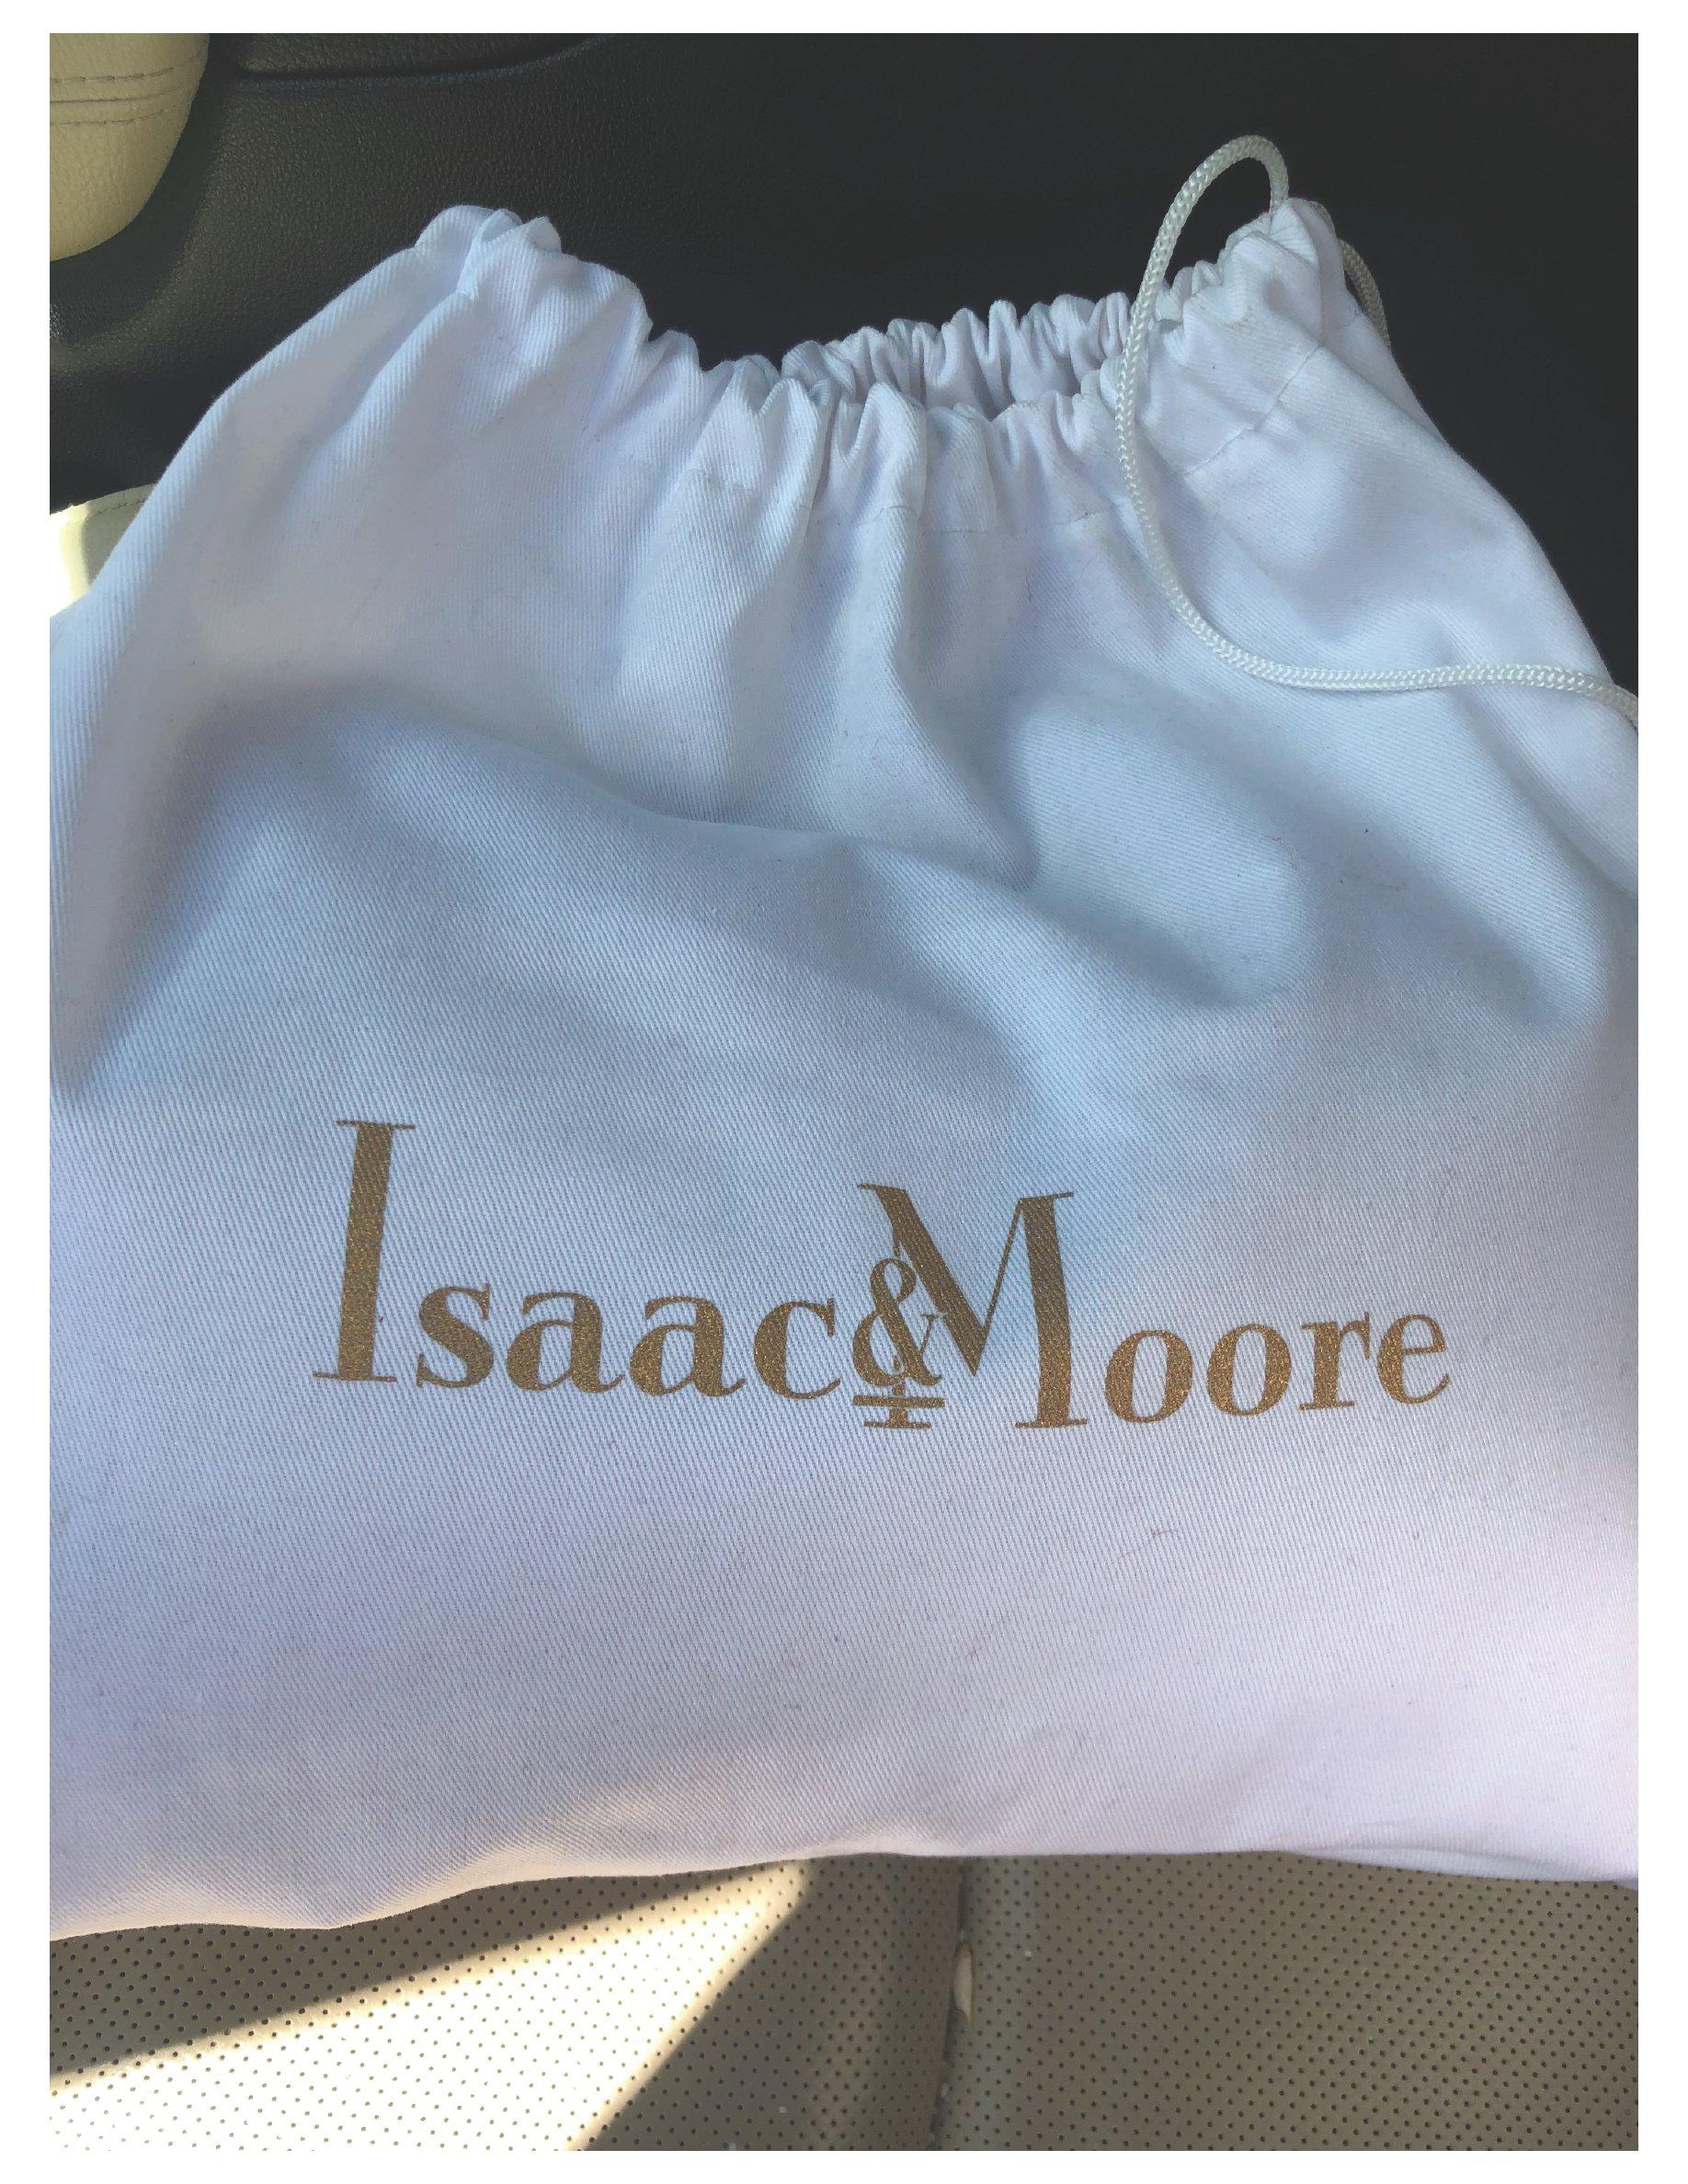 Phone Purse - Isaac & Moore